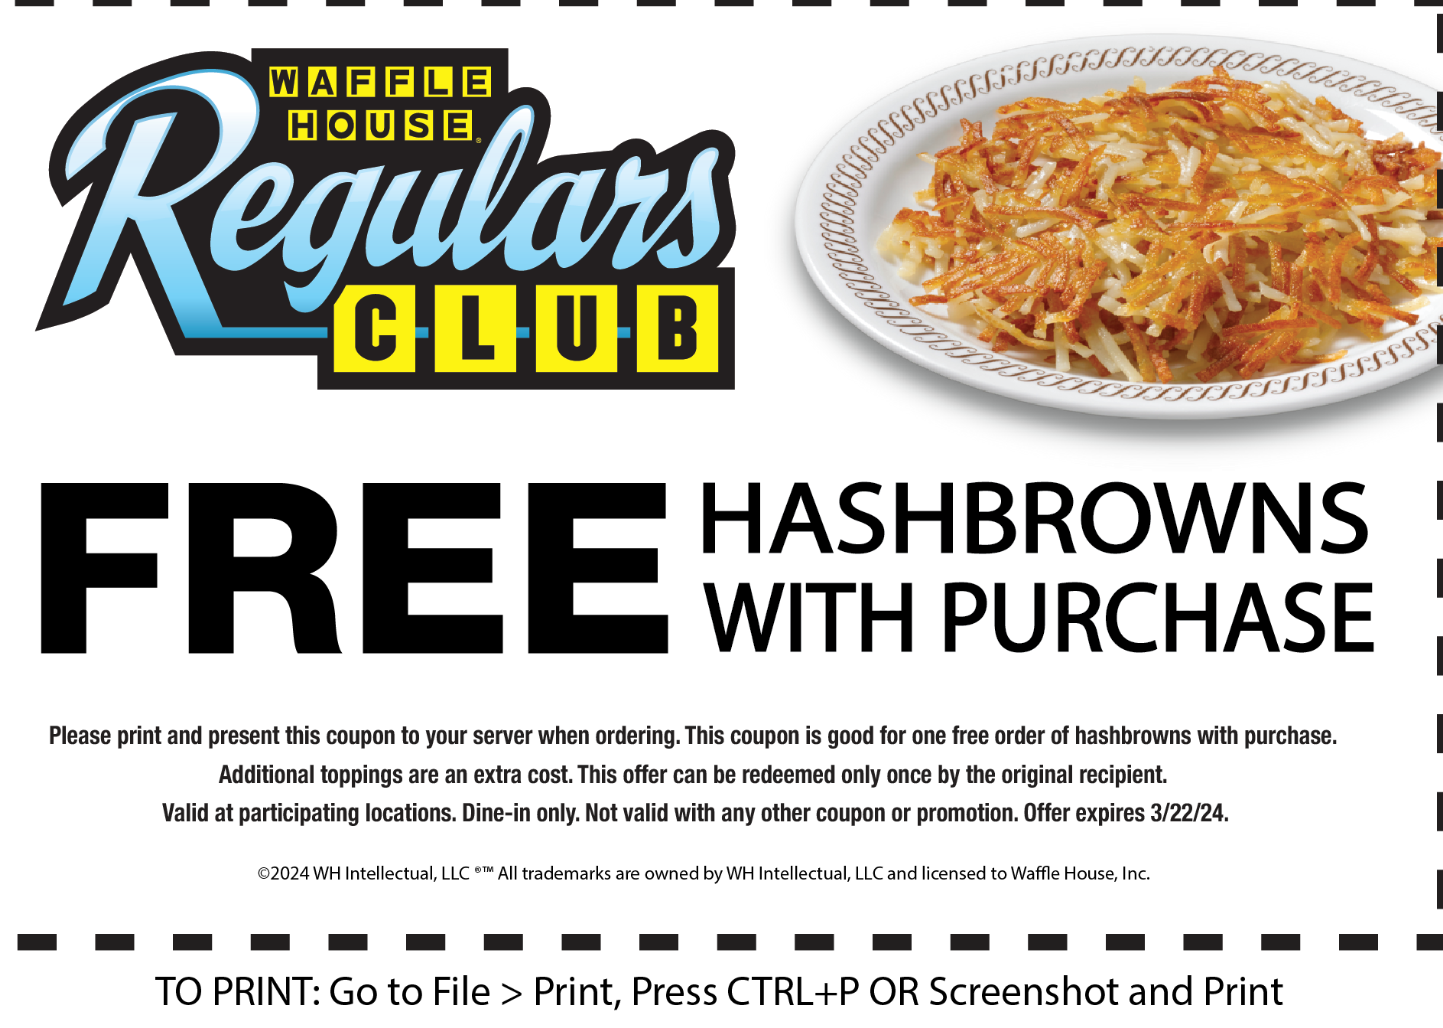 Waffle House Free Hashbrowns